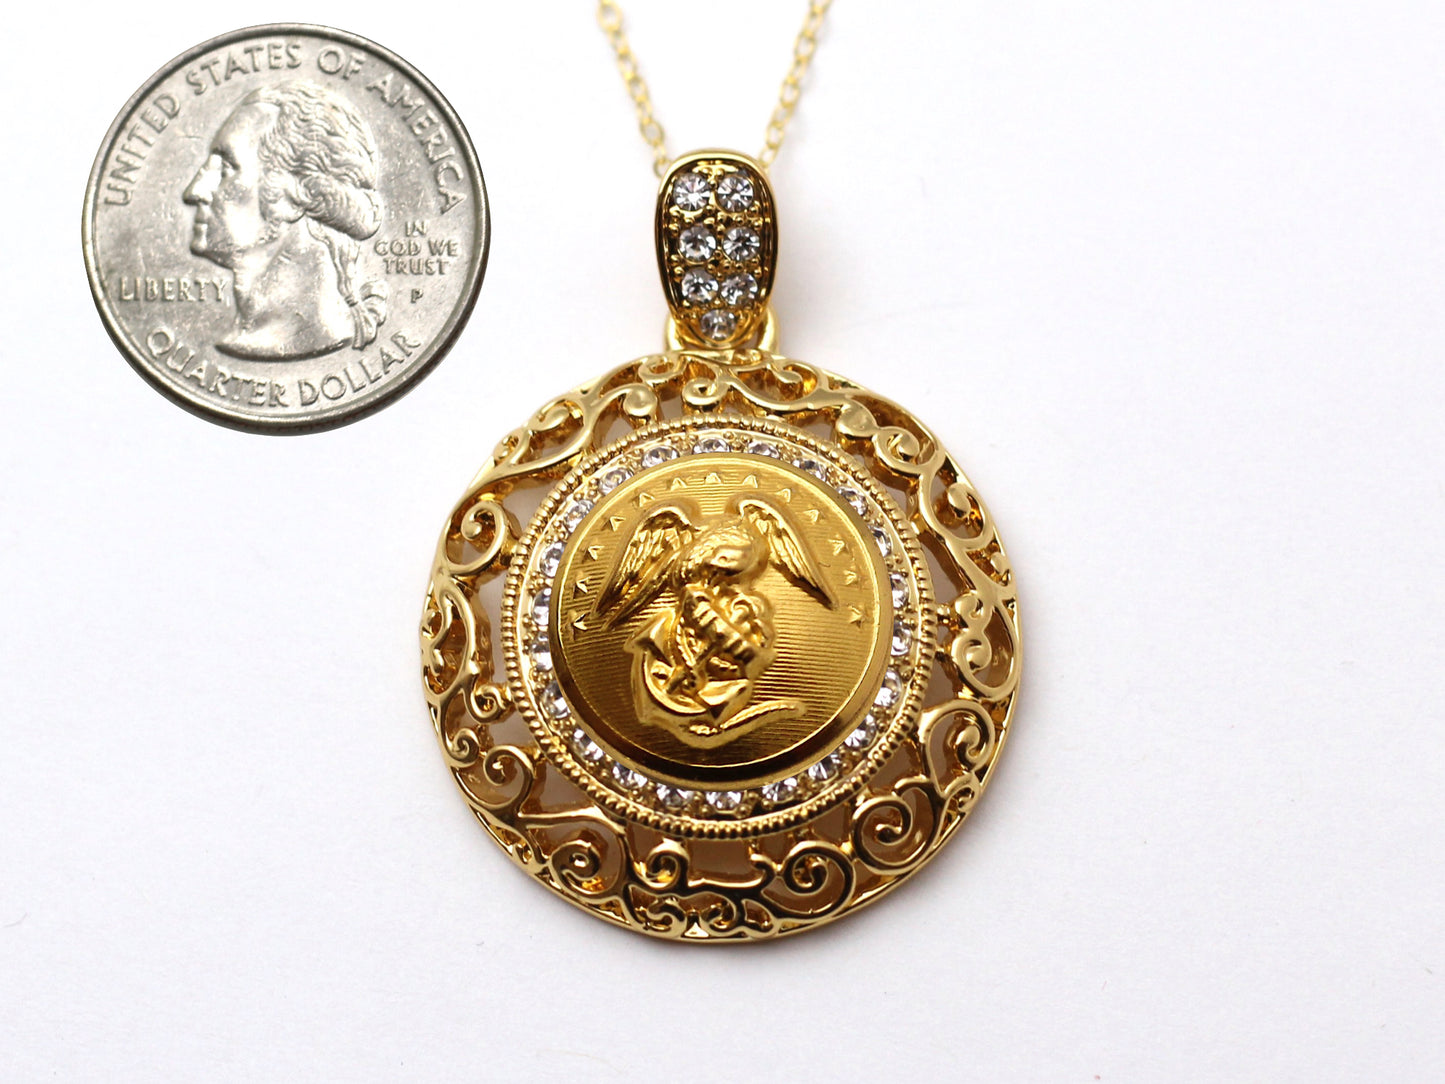 Marine Corps Button Necklace - Large Gold Rhinestone Pendant